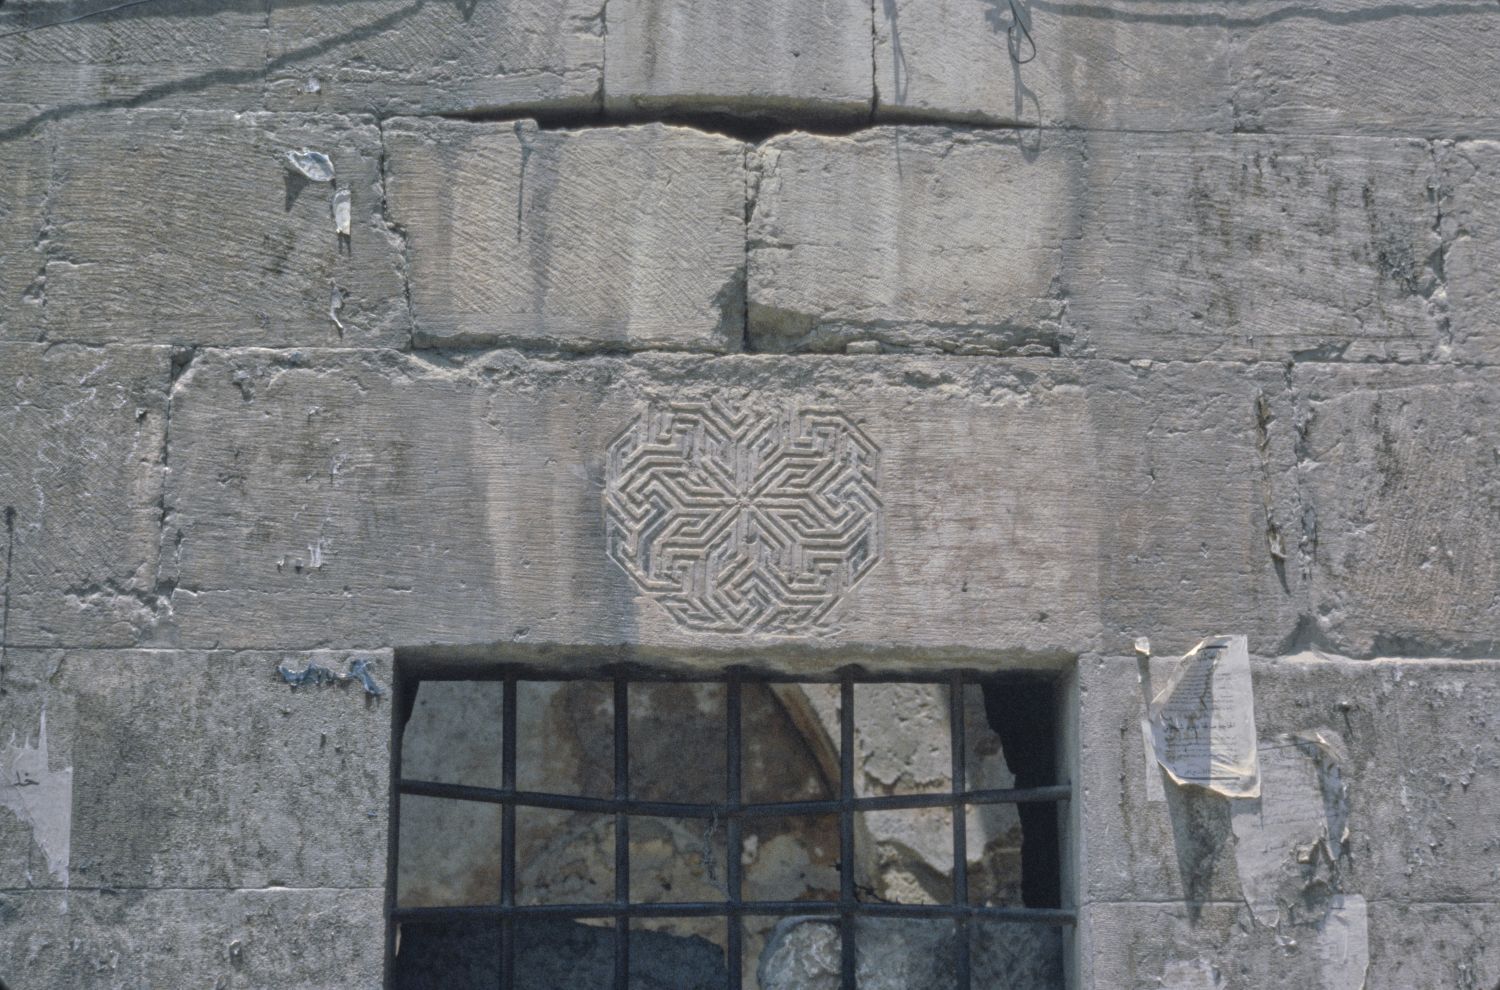 Window with decorative medallion on lintel.